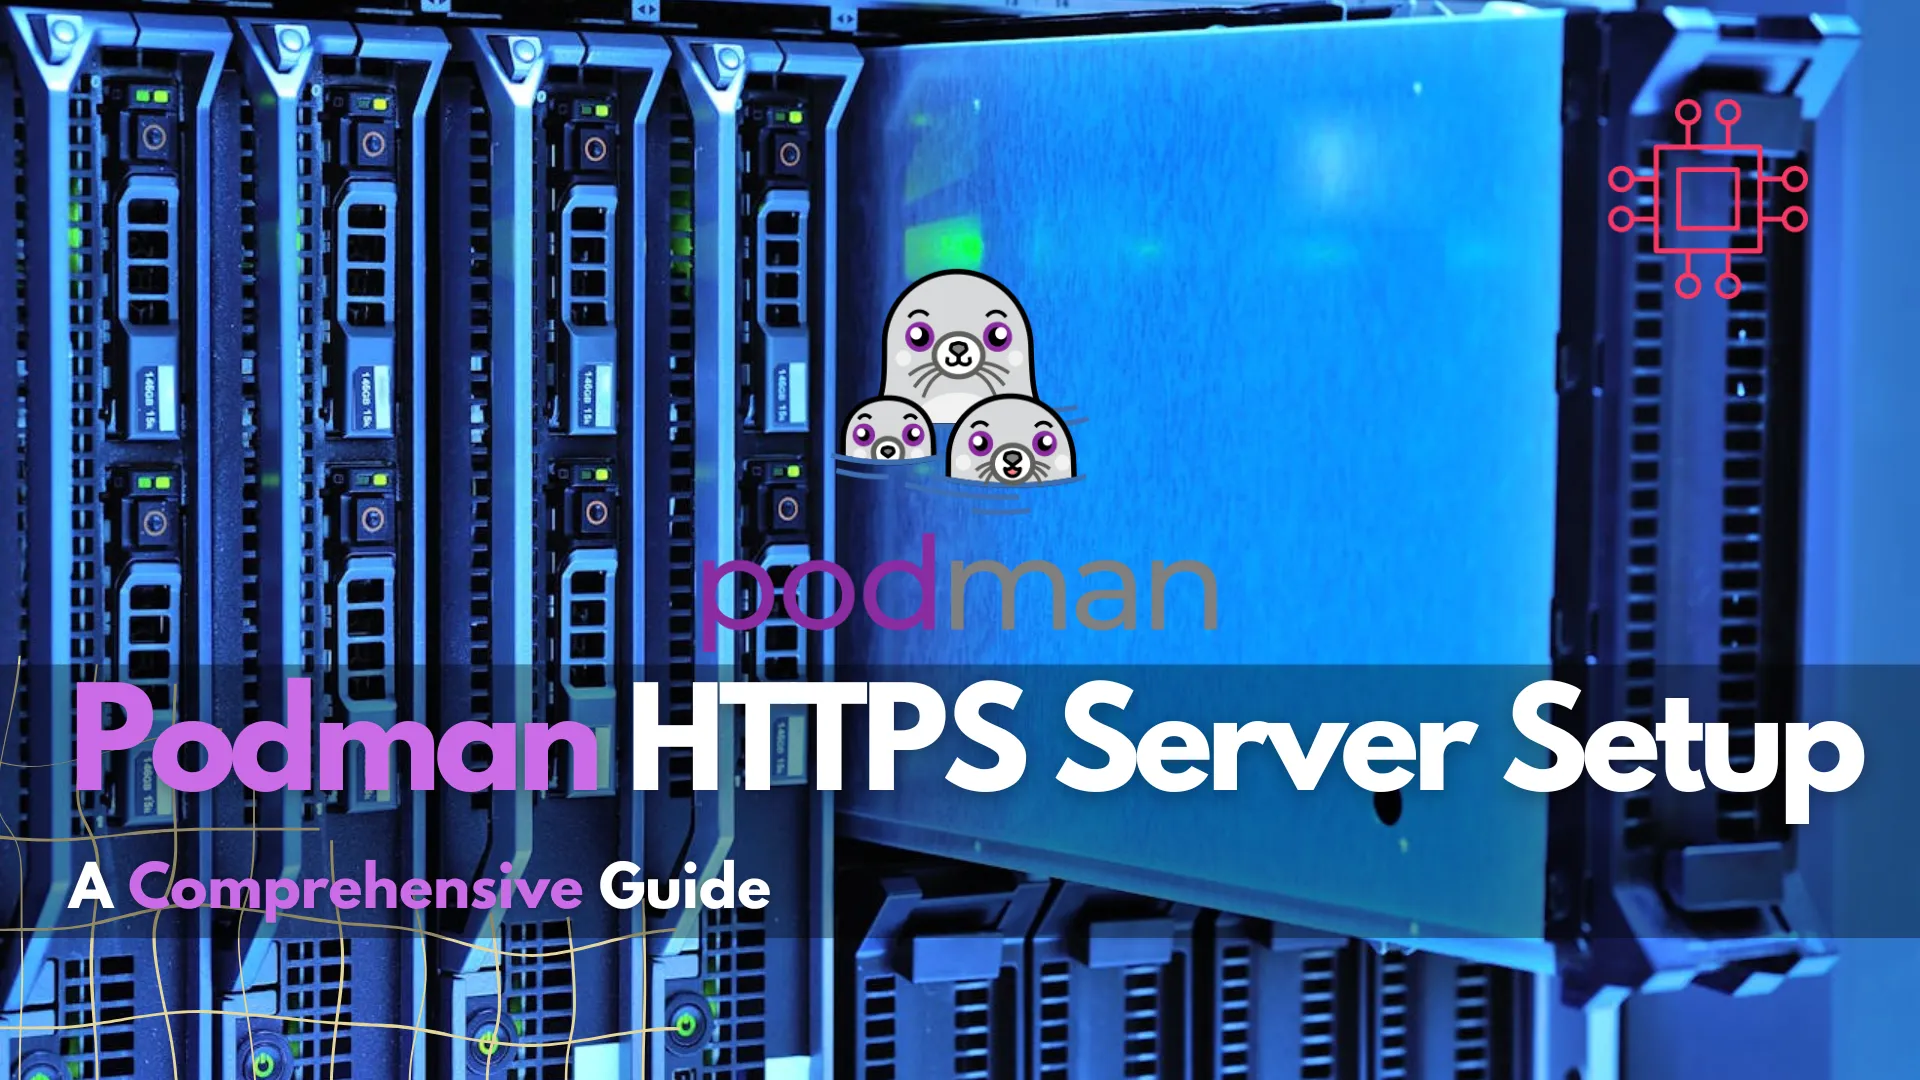 Podman HTTPS server setup